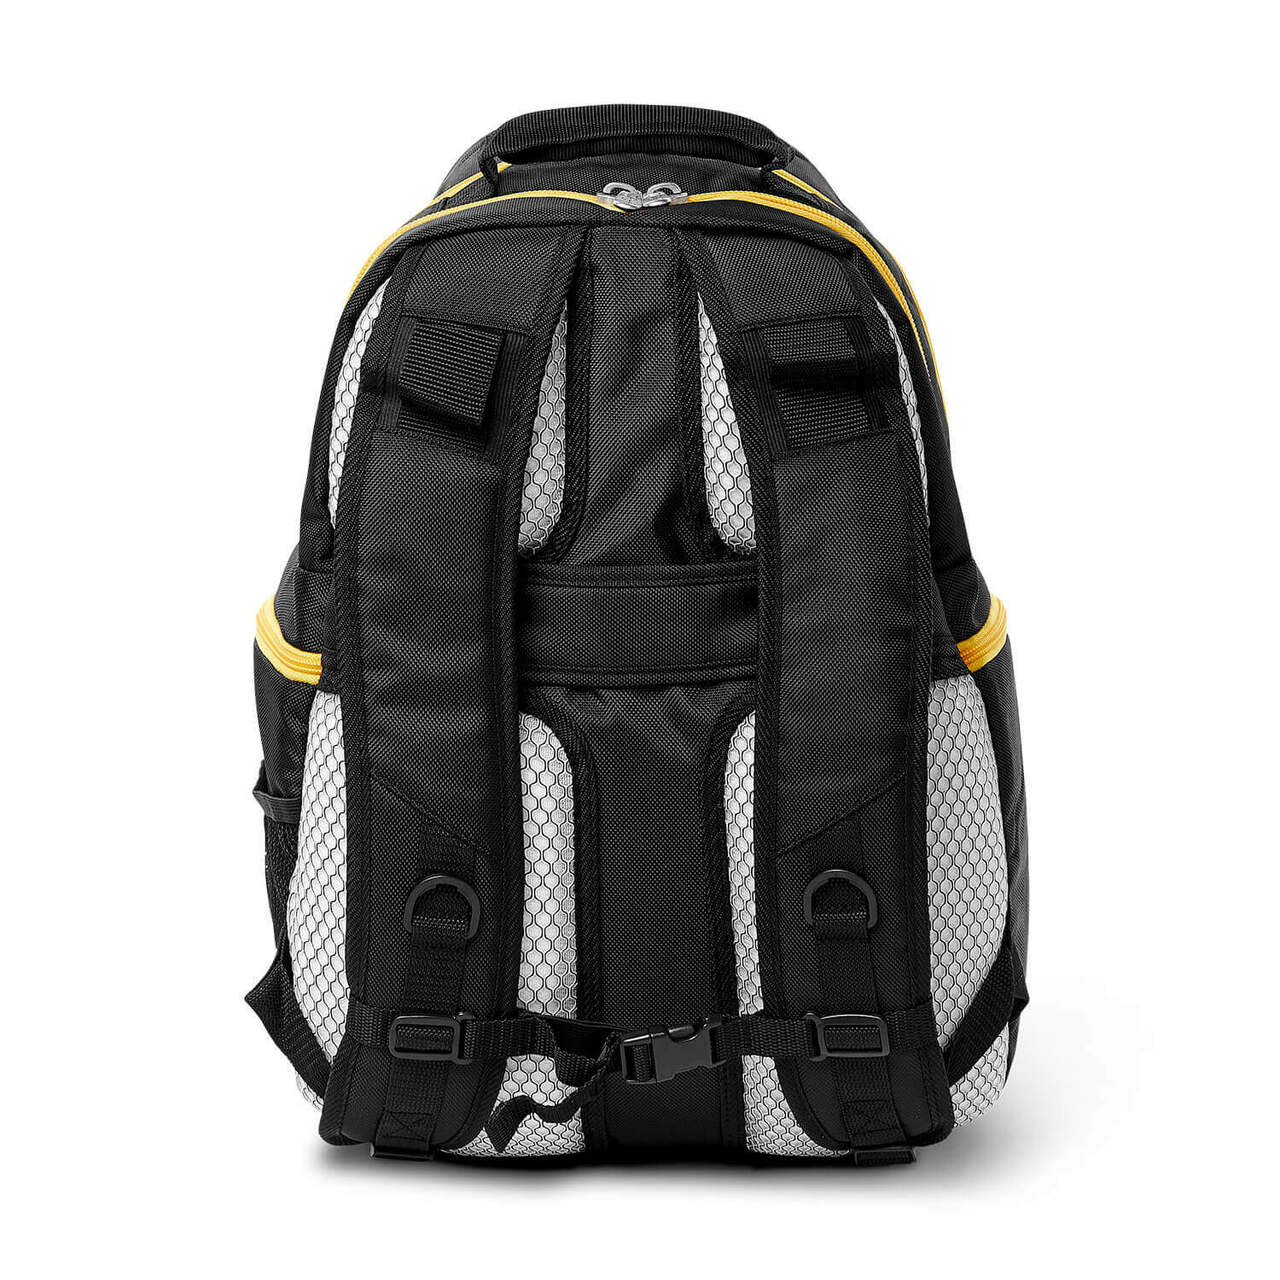 Predators Backpack | Nashville Predators Laptop Backpack